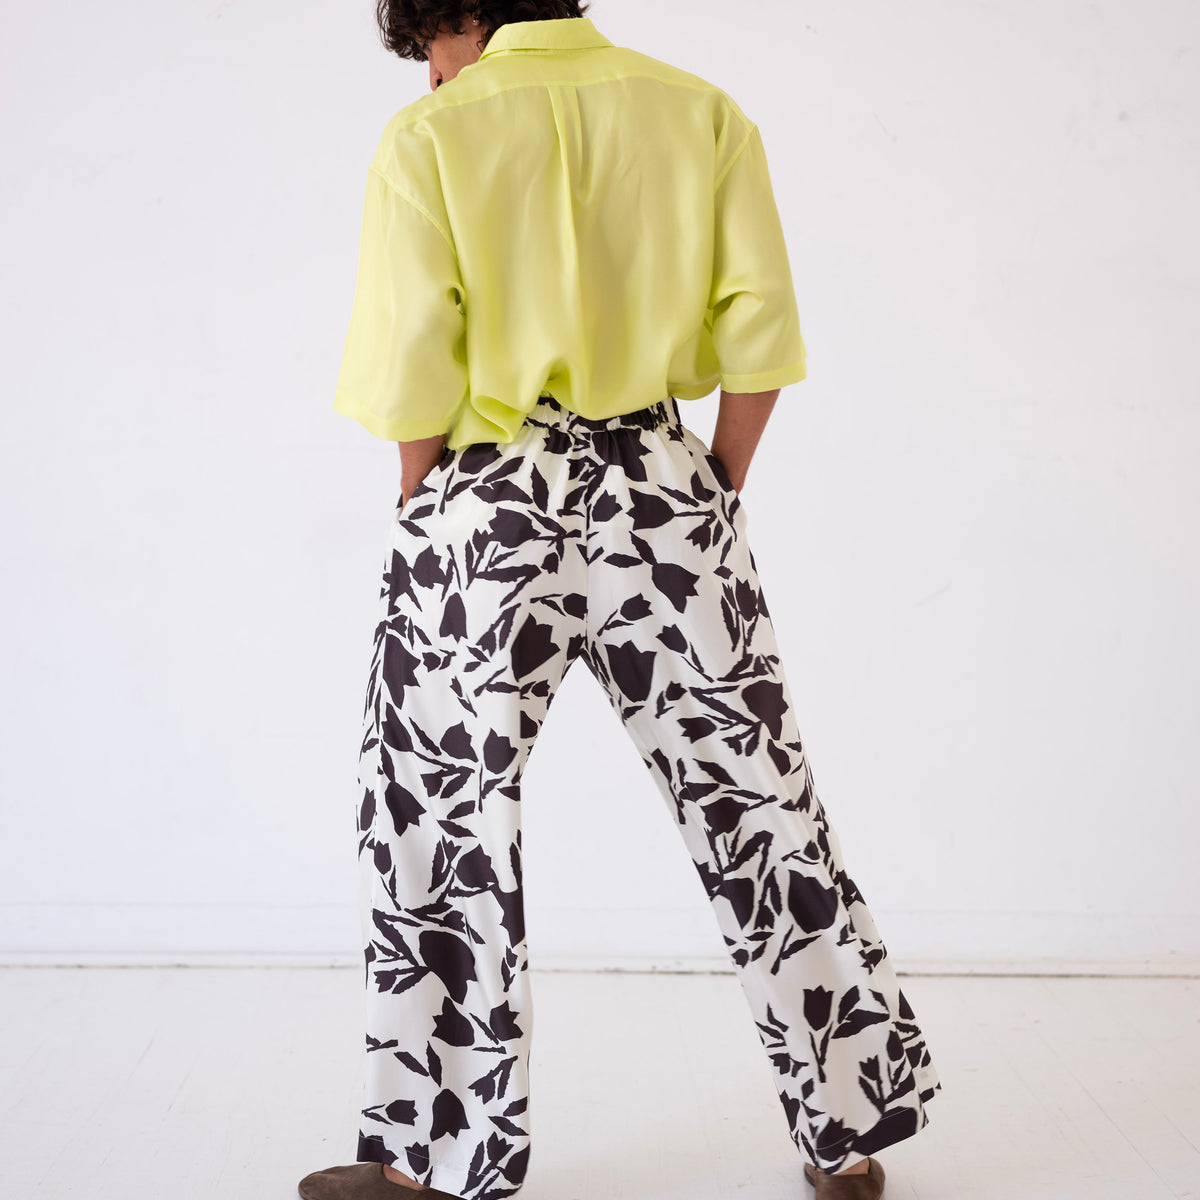 Buy Banana Bucket Mens Casual Fashion Slim Fit Chinos Pants Stretch  Flat-Front Skinny Dress Pants, Green, 30 at Amazon.in